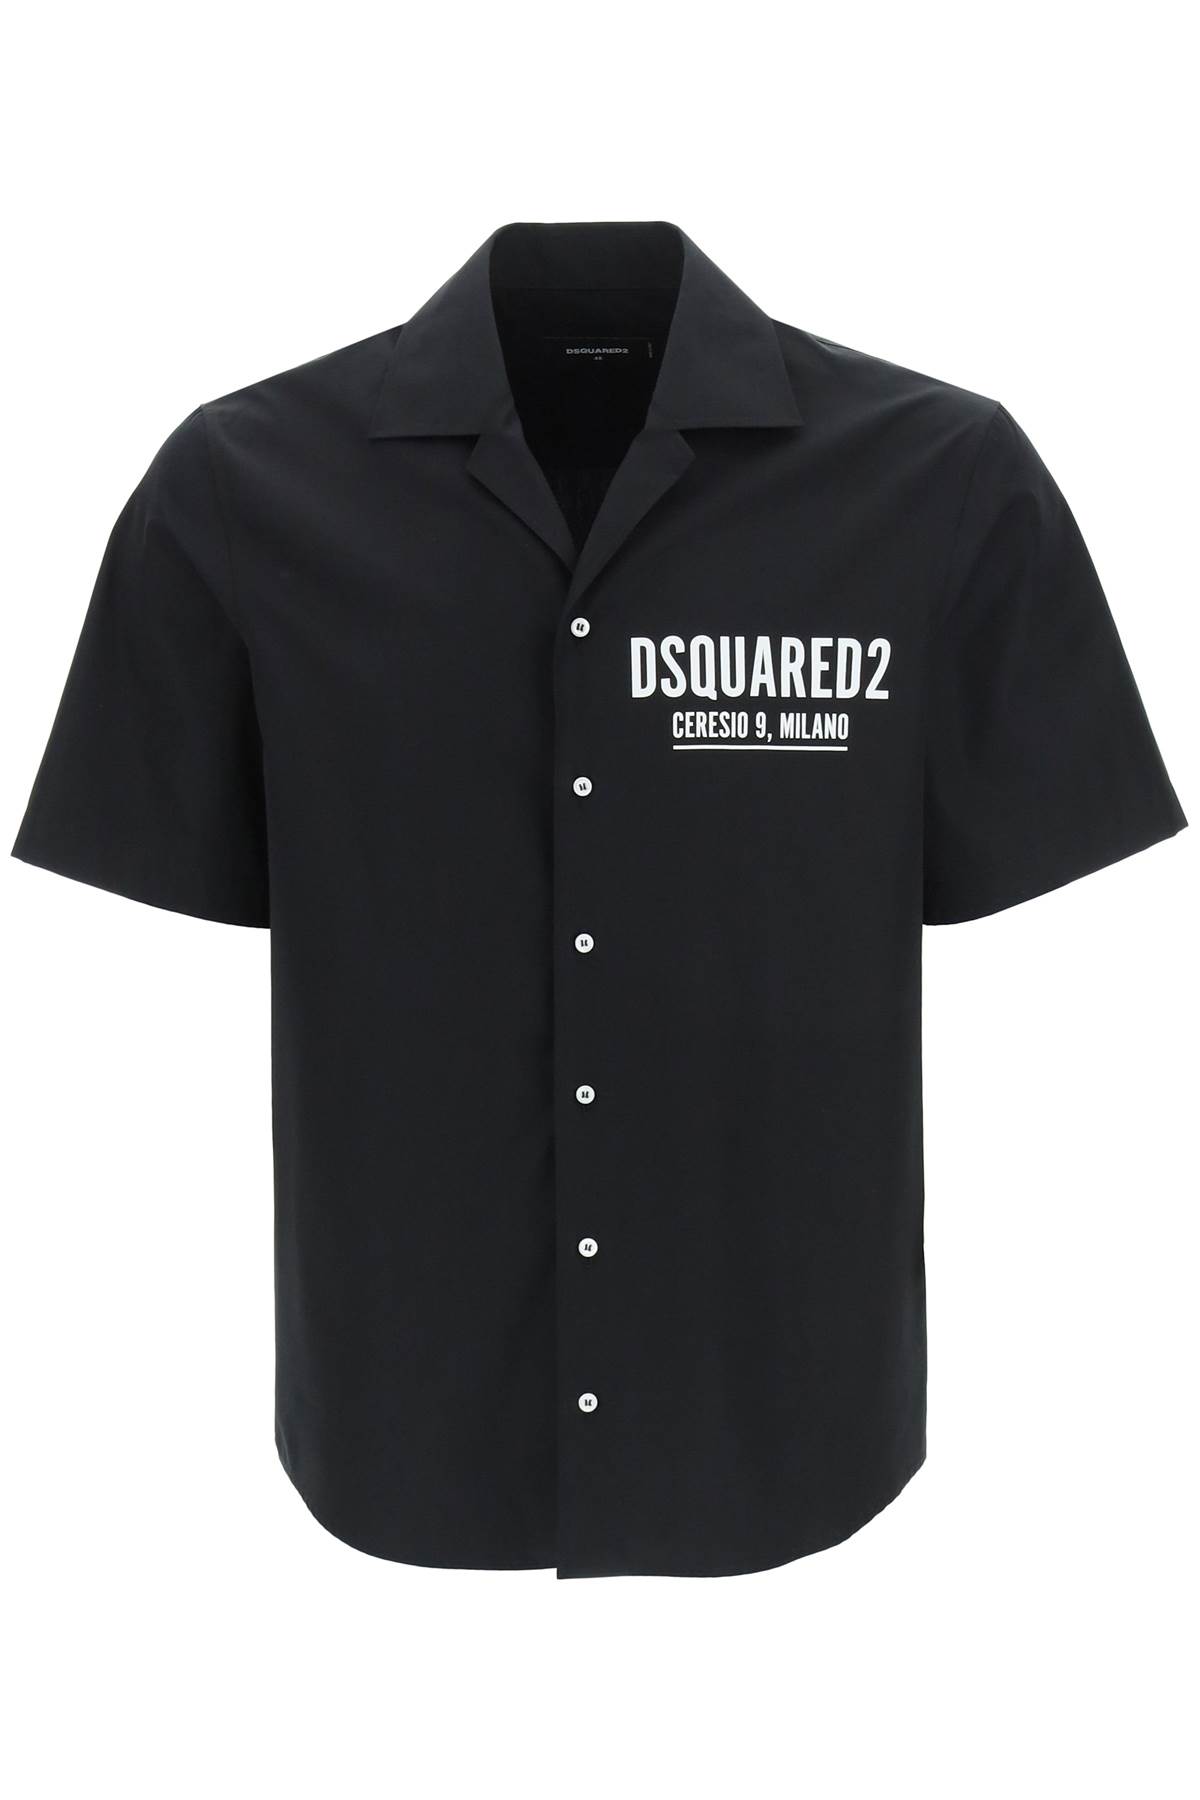 Dsquared2 Ceresio 9 Short Sleeve Shirt